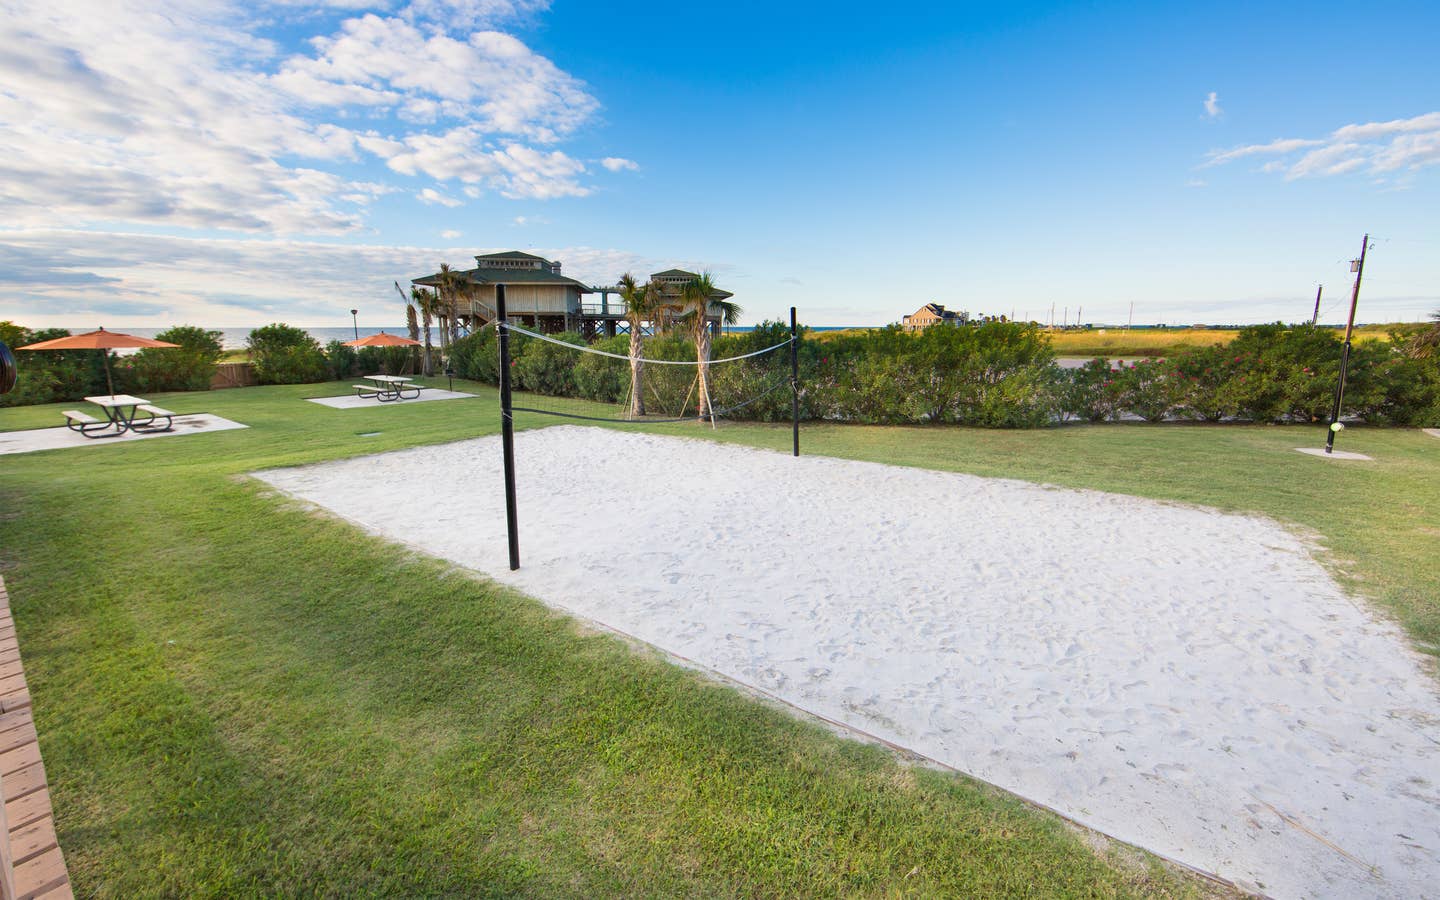 Outdoor sand volleyball court at Galveston Beach Resort in Texas.